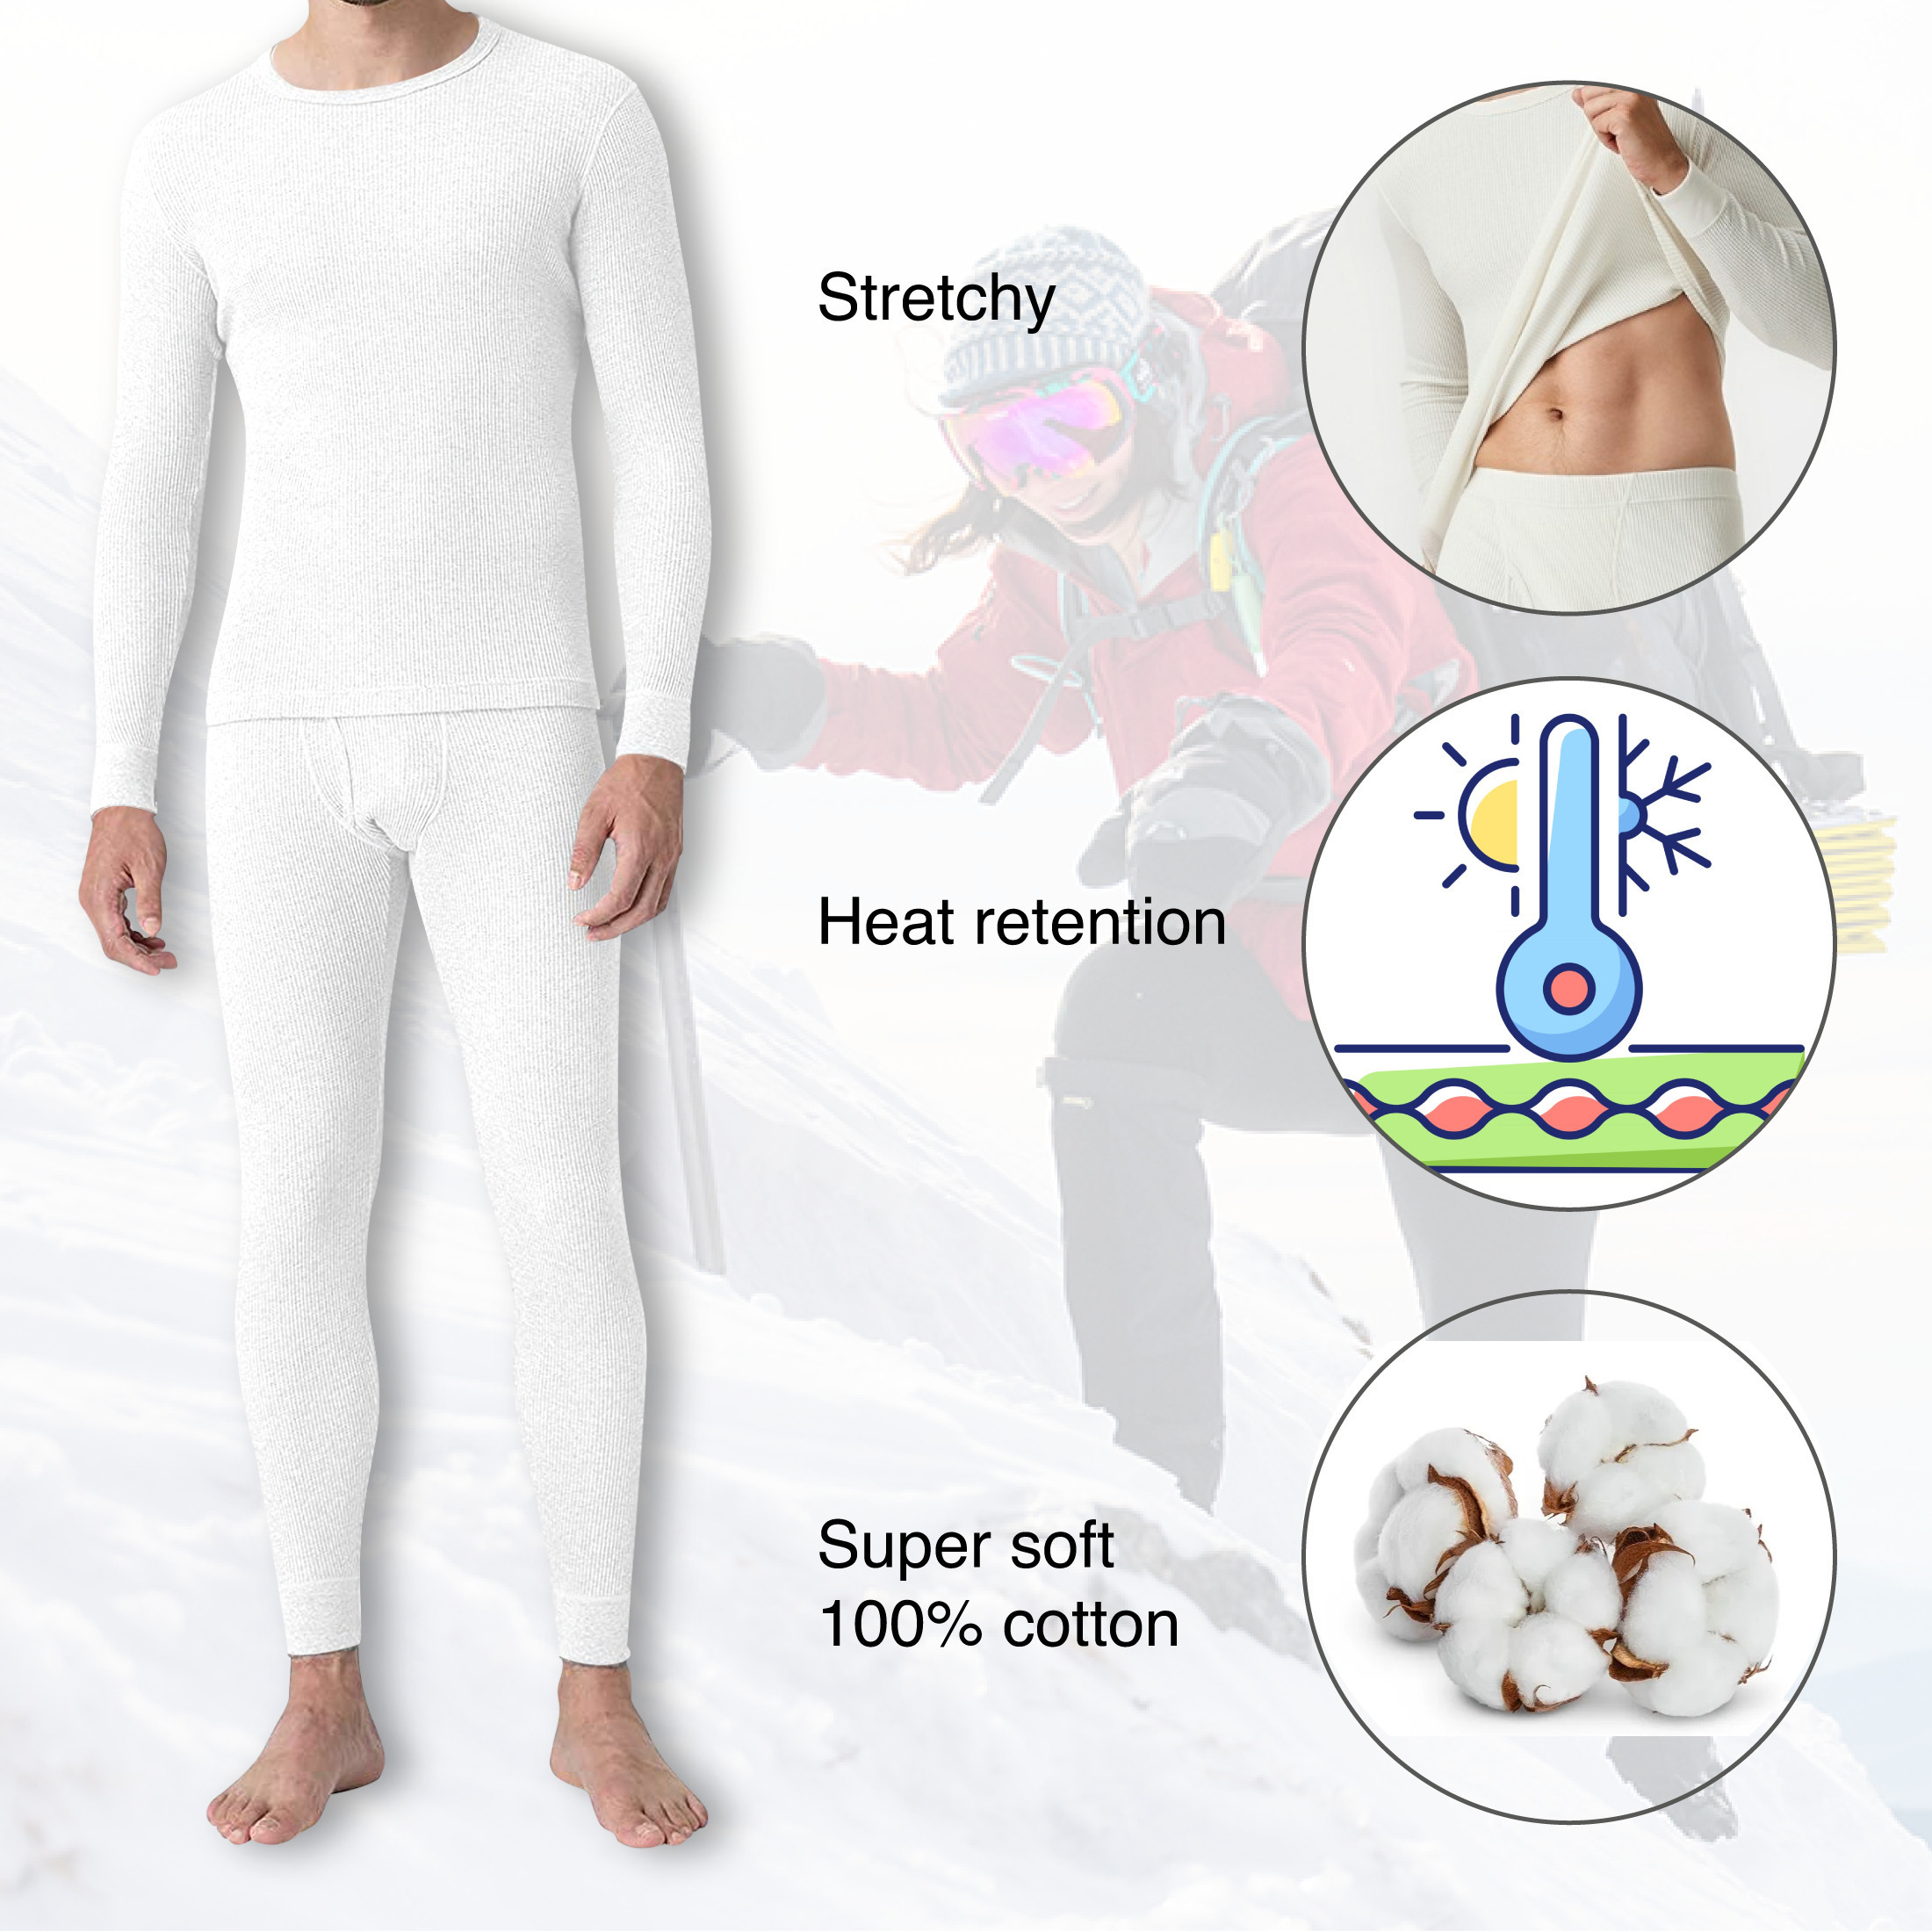 2-Sets: Men's Super Soft Cotton Waffle Knit Winter Thermal Underwear Set - Grey & Navy, 2X-Large